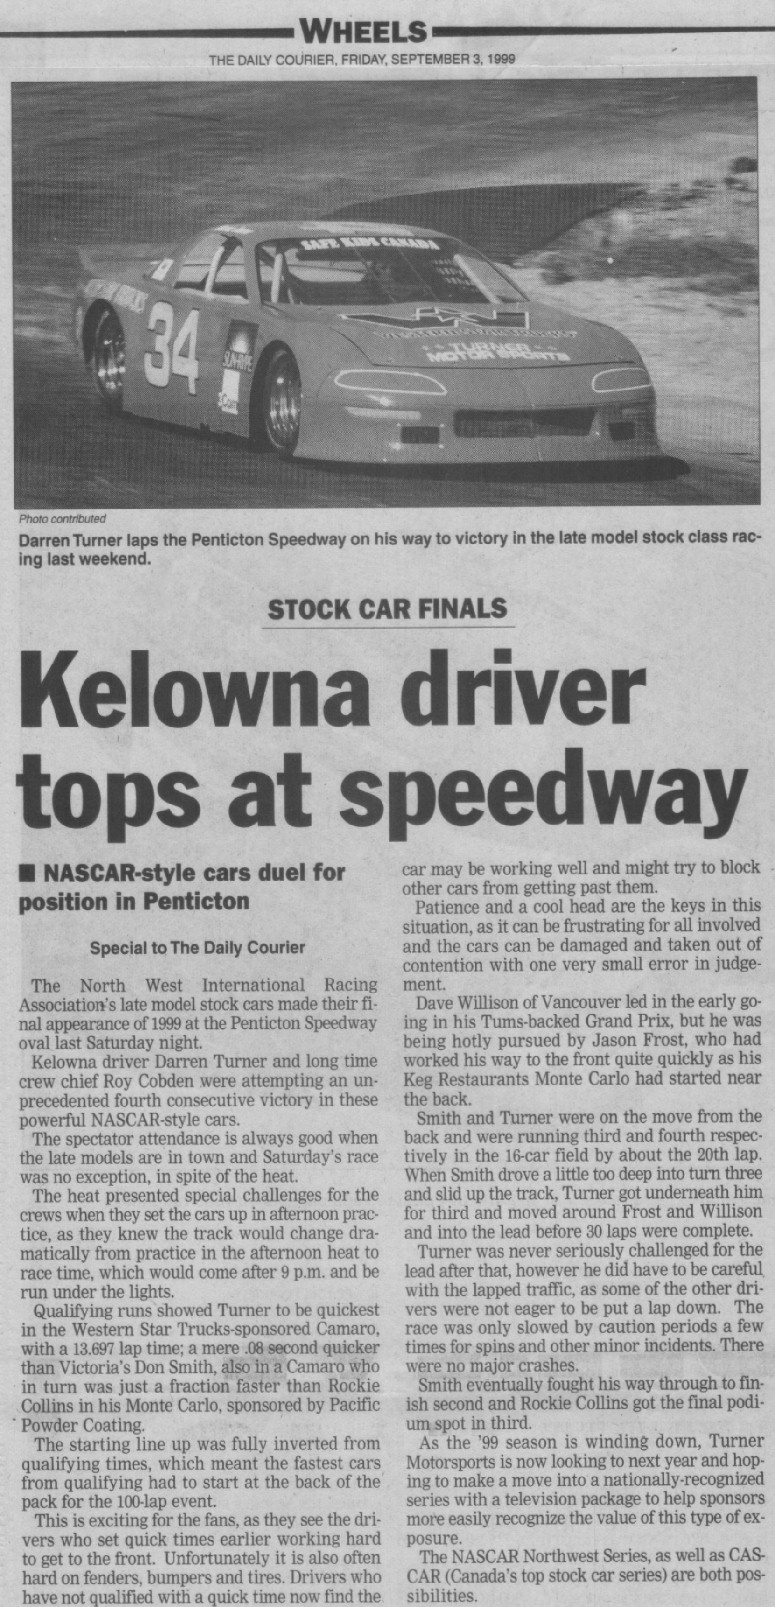 Darren Turner newspaper report of the race